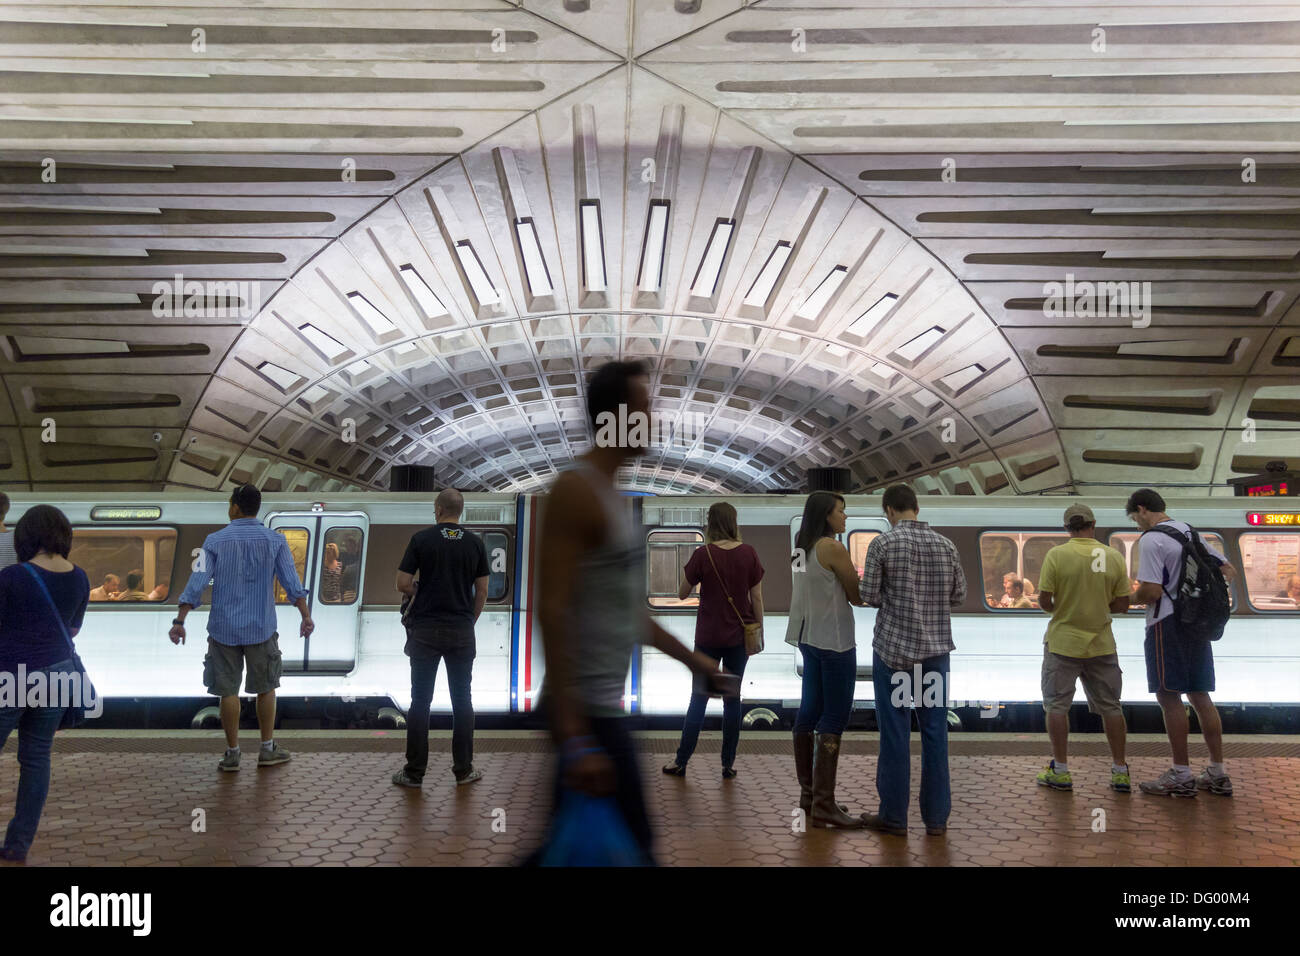 Metro Center subway station, Washington DC. People, tourists, waiting on the platform for the underground train to arrive. Stock Photo